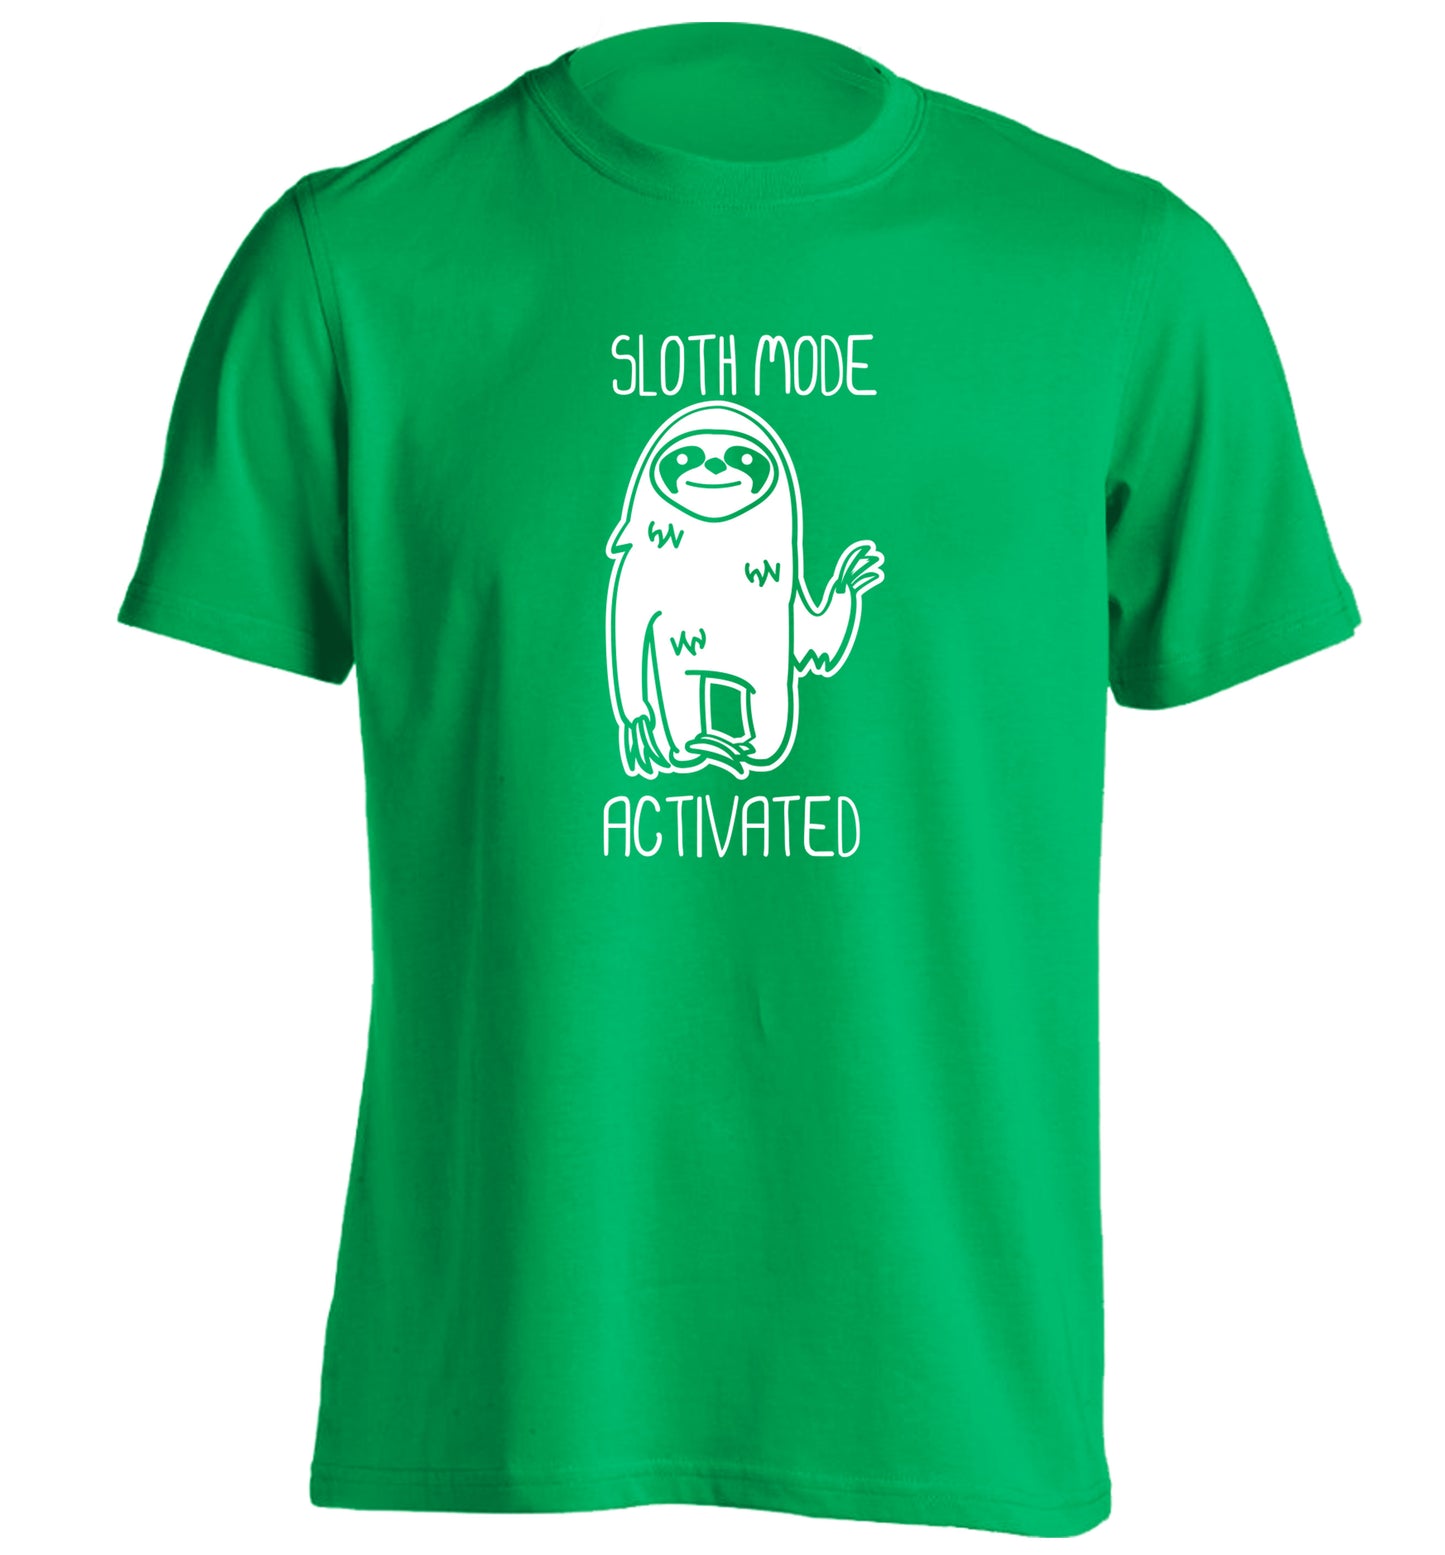 Sloth mode acitvated adults unisex green Tshirt 2XL